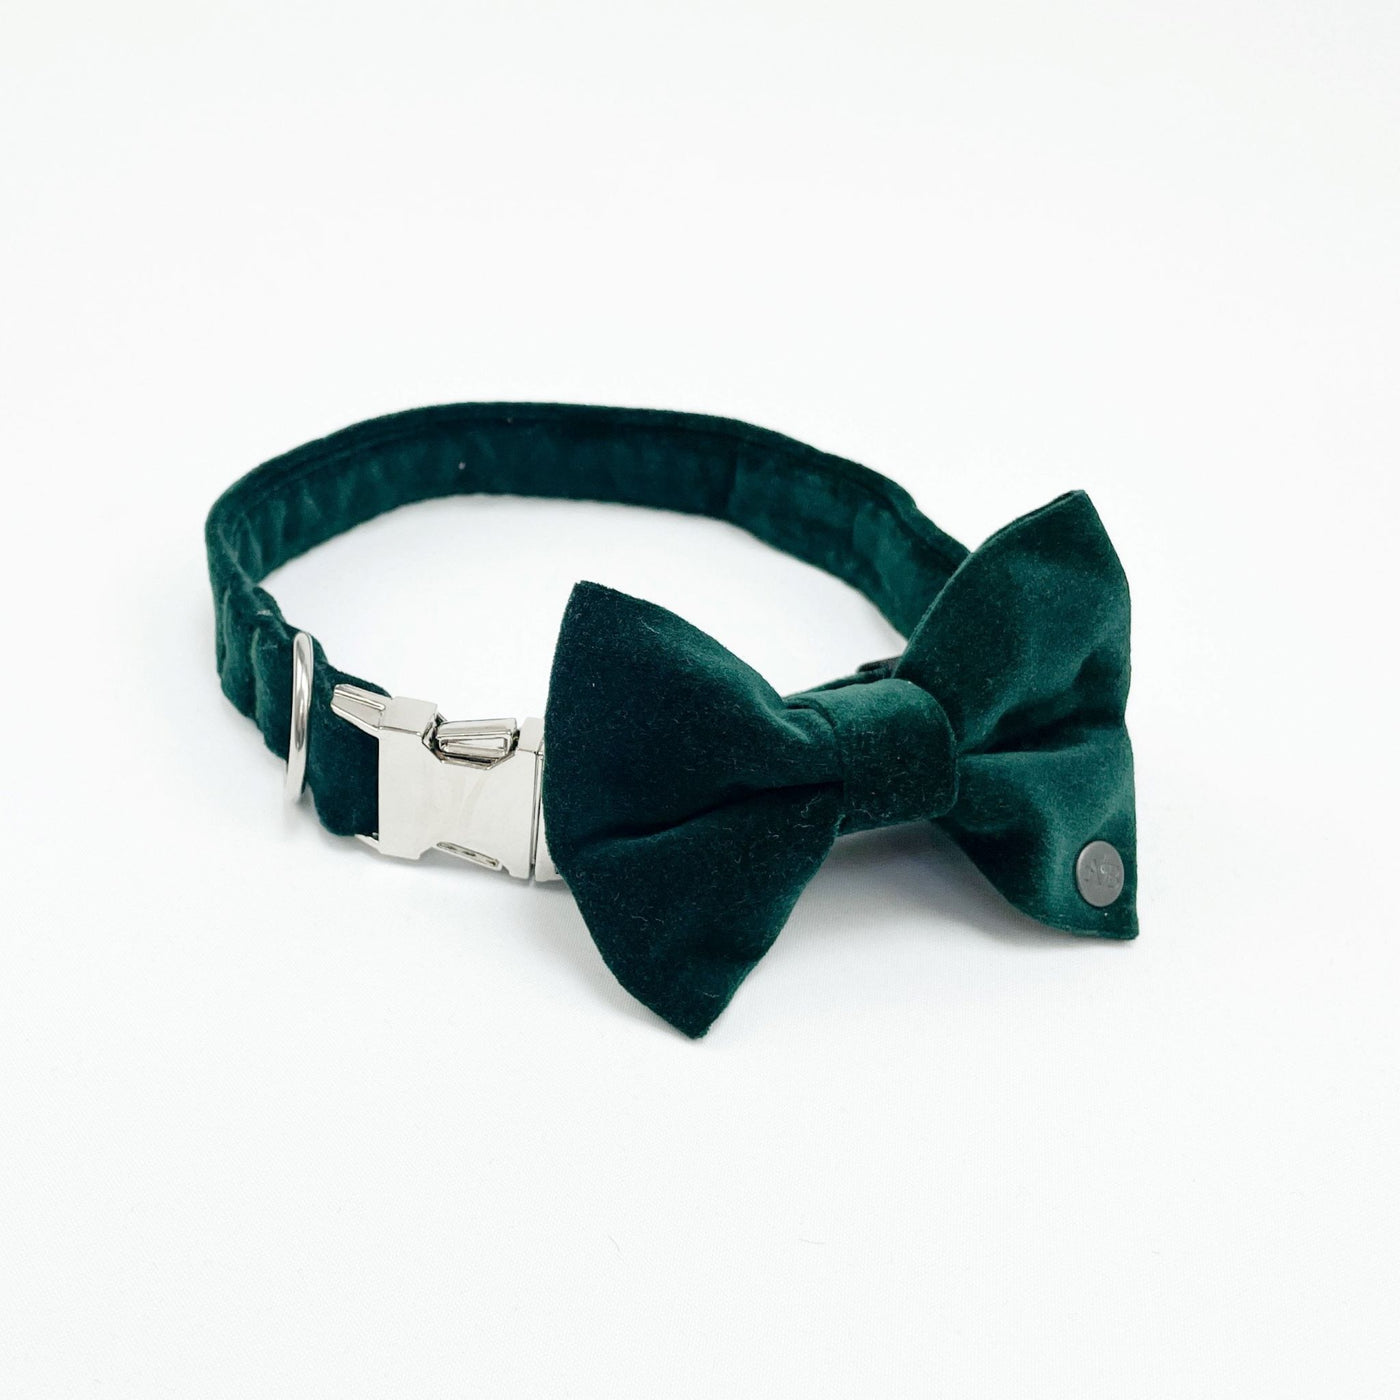 Luxury Emerald Green Velvet Dog Bow Tie shown on matching collar